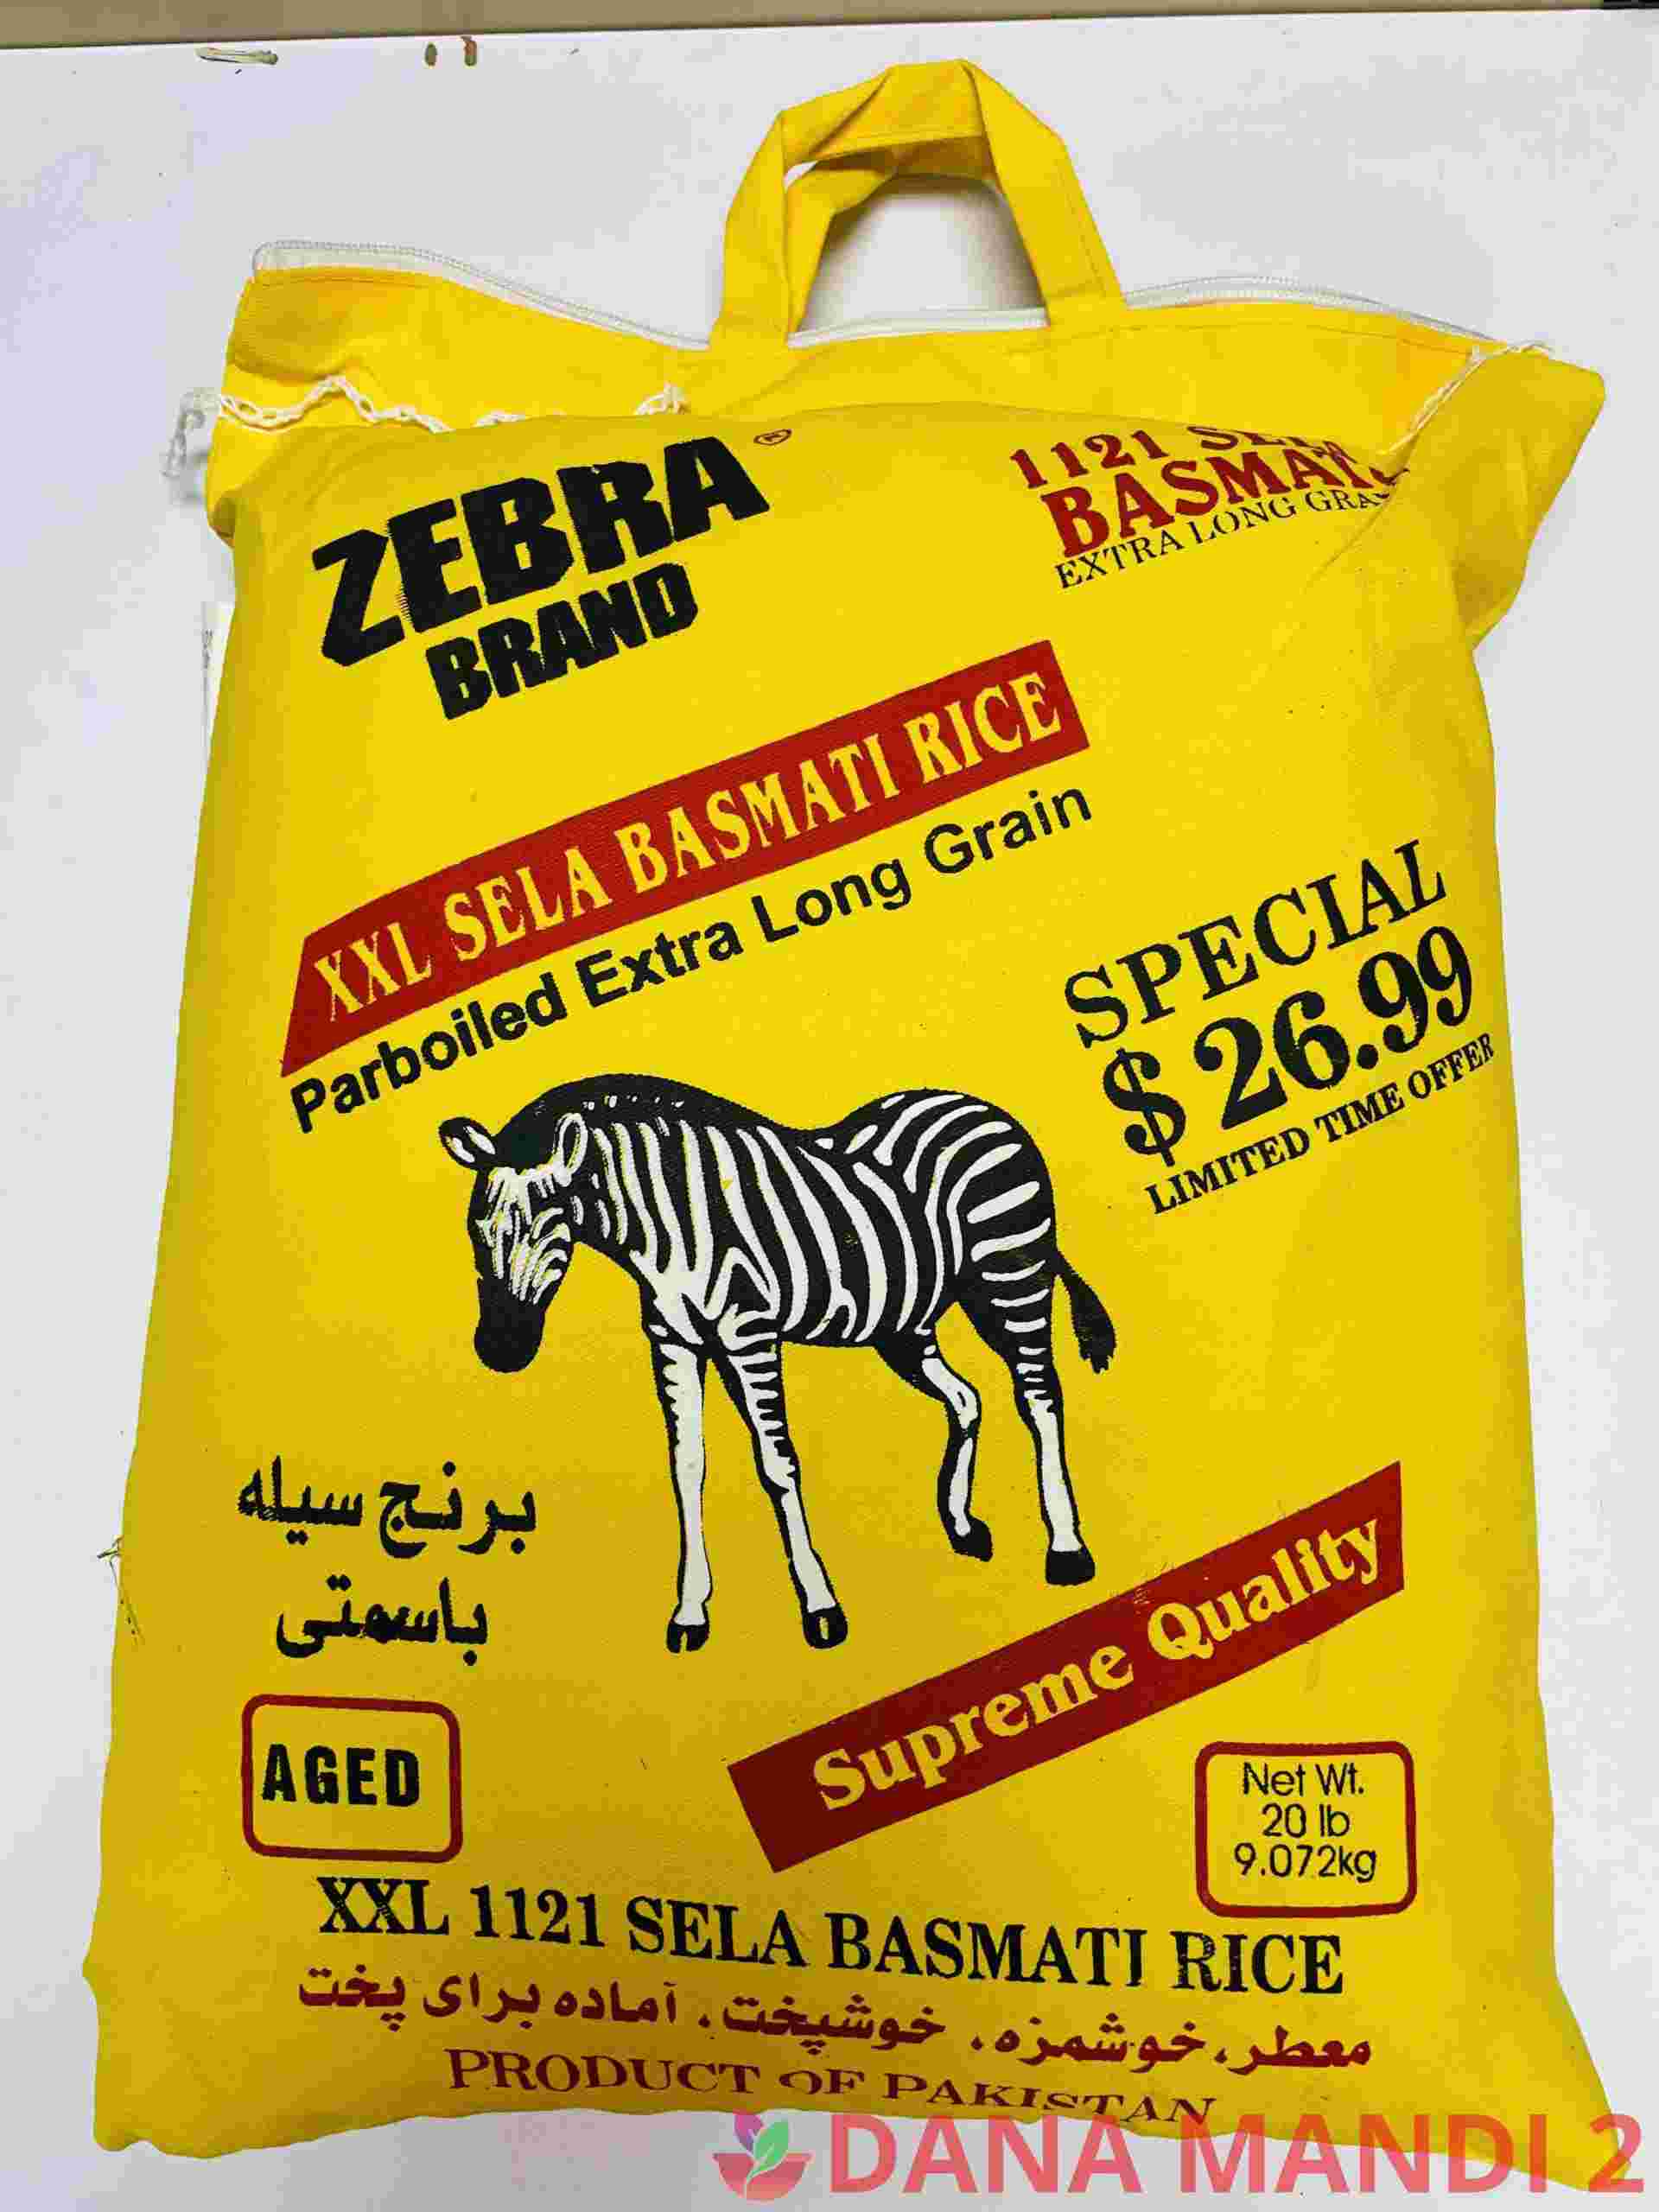 Zebra 1121 Xxl Sela Basmati Rice